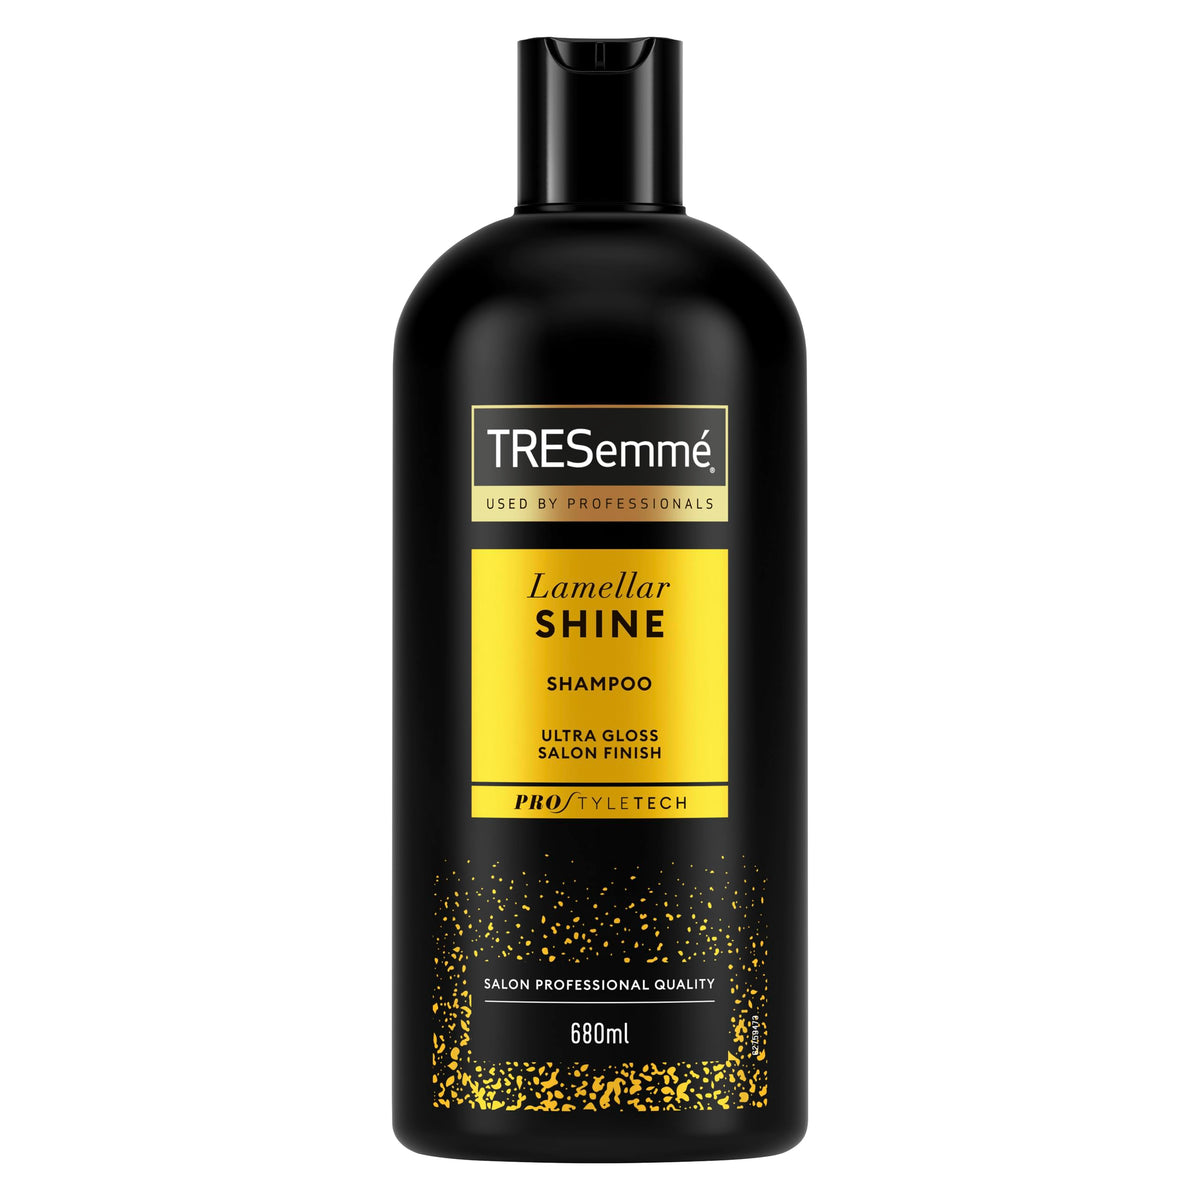 TRESemmÃ© Lamellar Shine Shampoo with patented Lamellar Technology hair care product for an ultra-glossy salon finish 680 ml